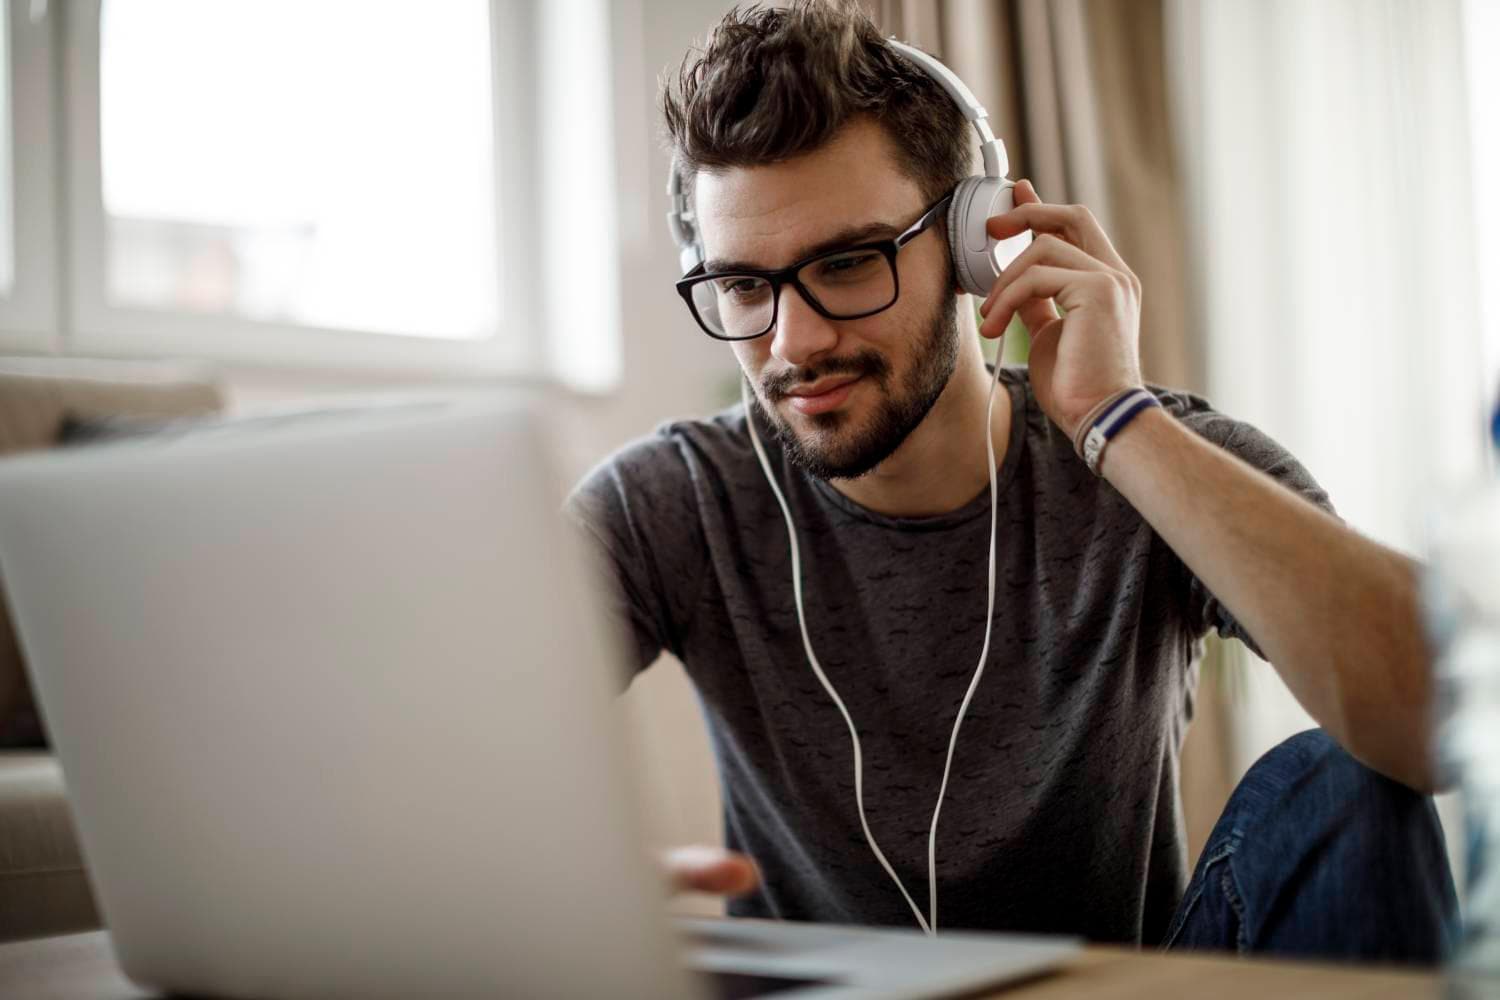 Man wearing headphones looking at a laptop